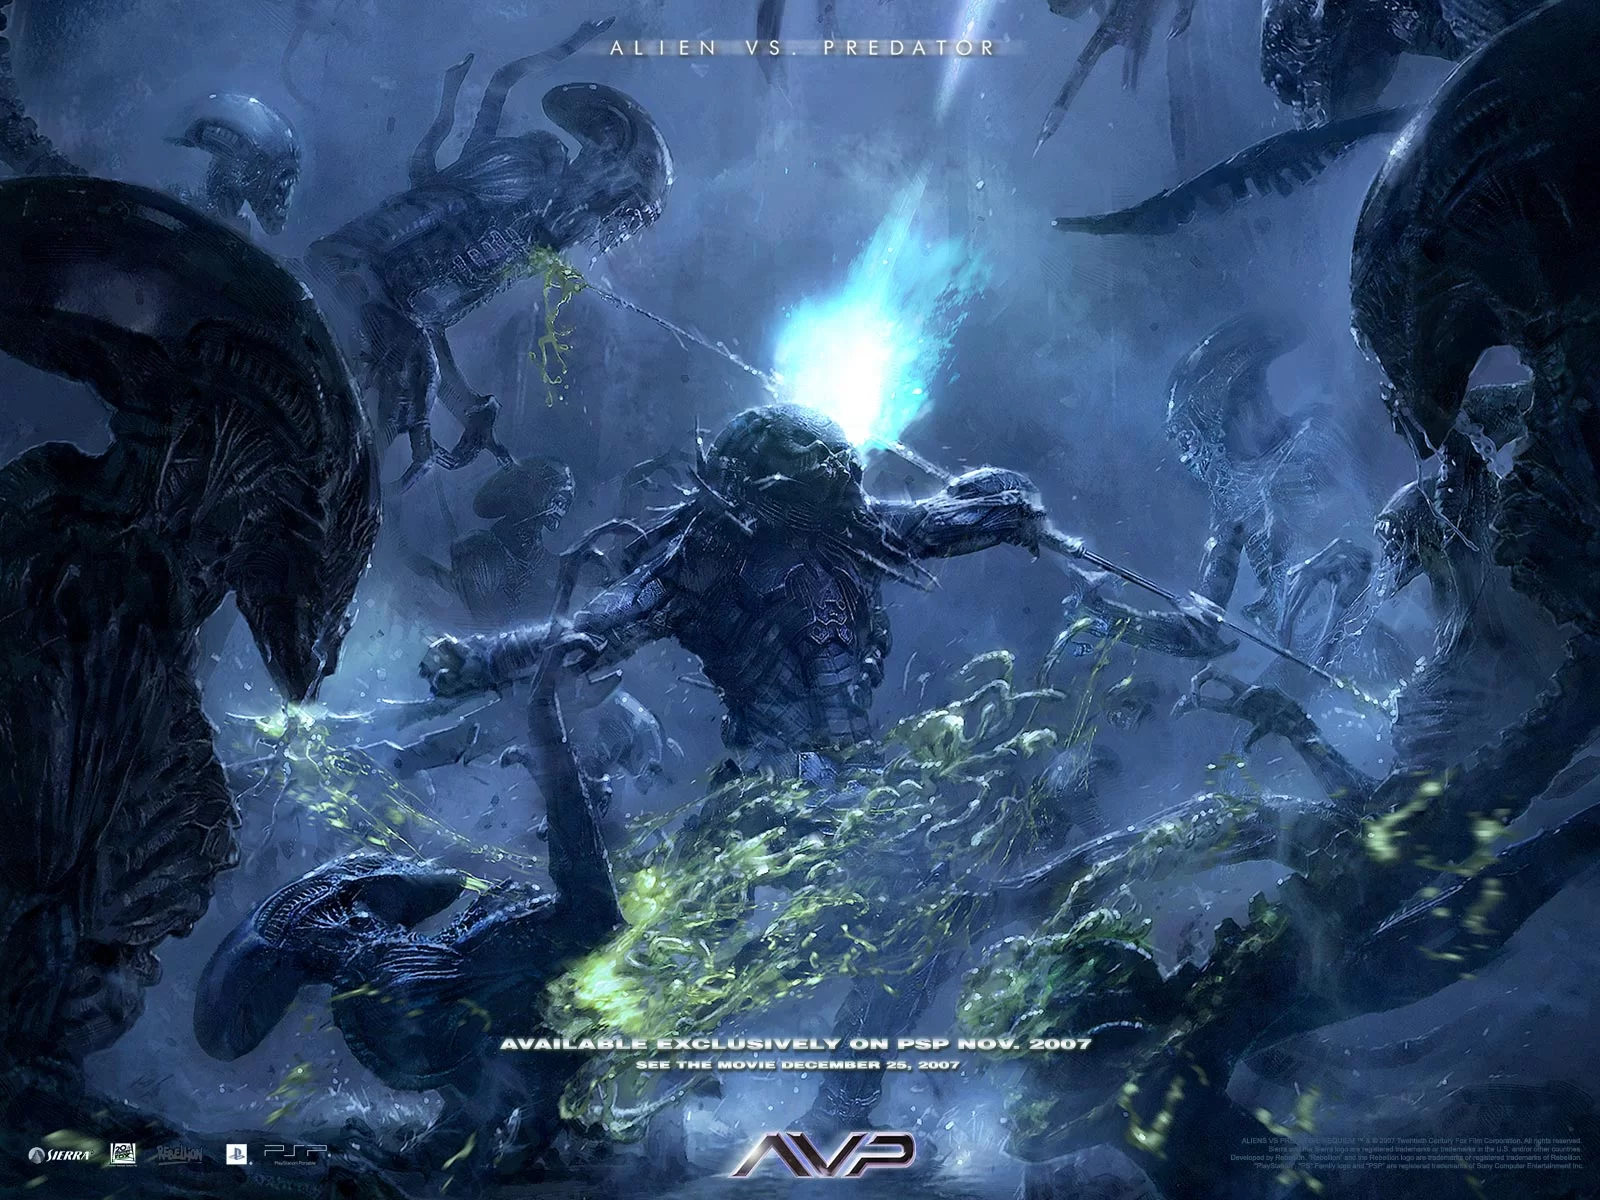 Aliens vs. Predator: Requiem - PSP Gameplay 4k 2160p (PPSSPP) 